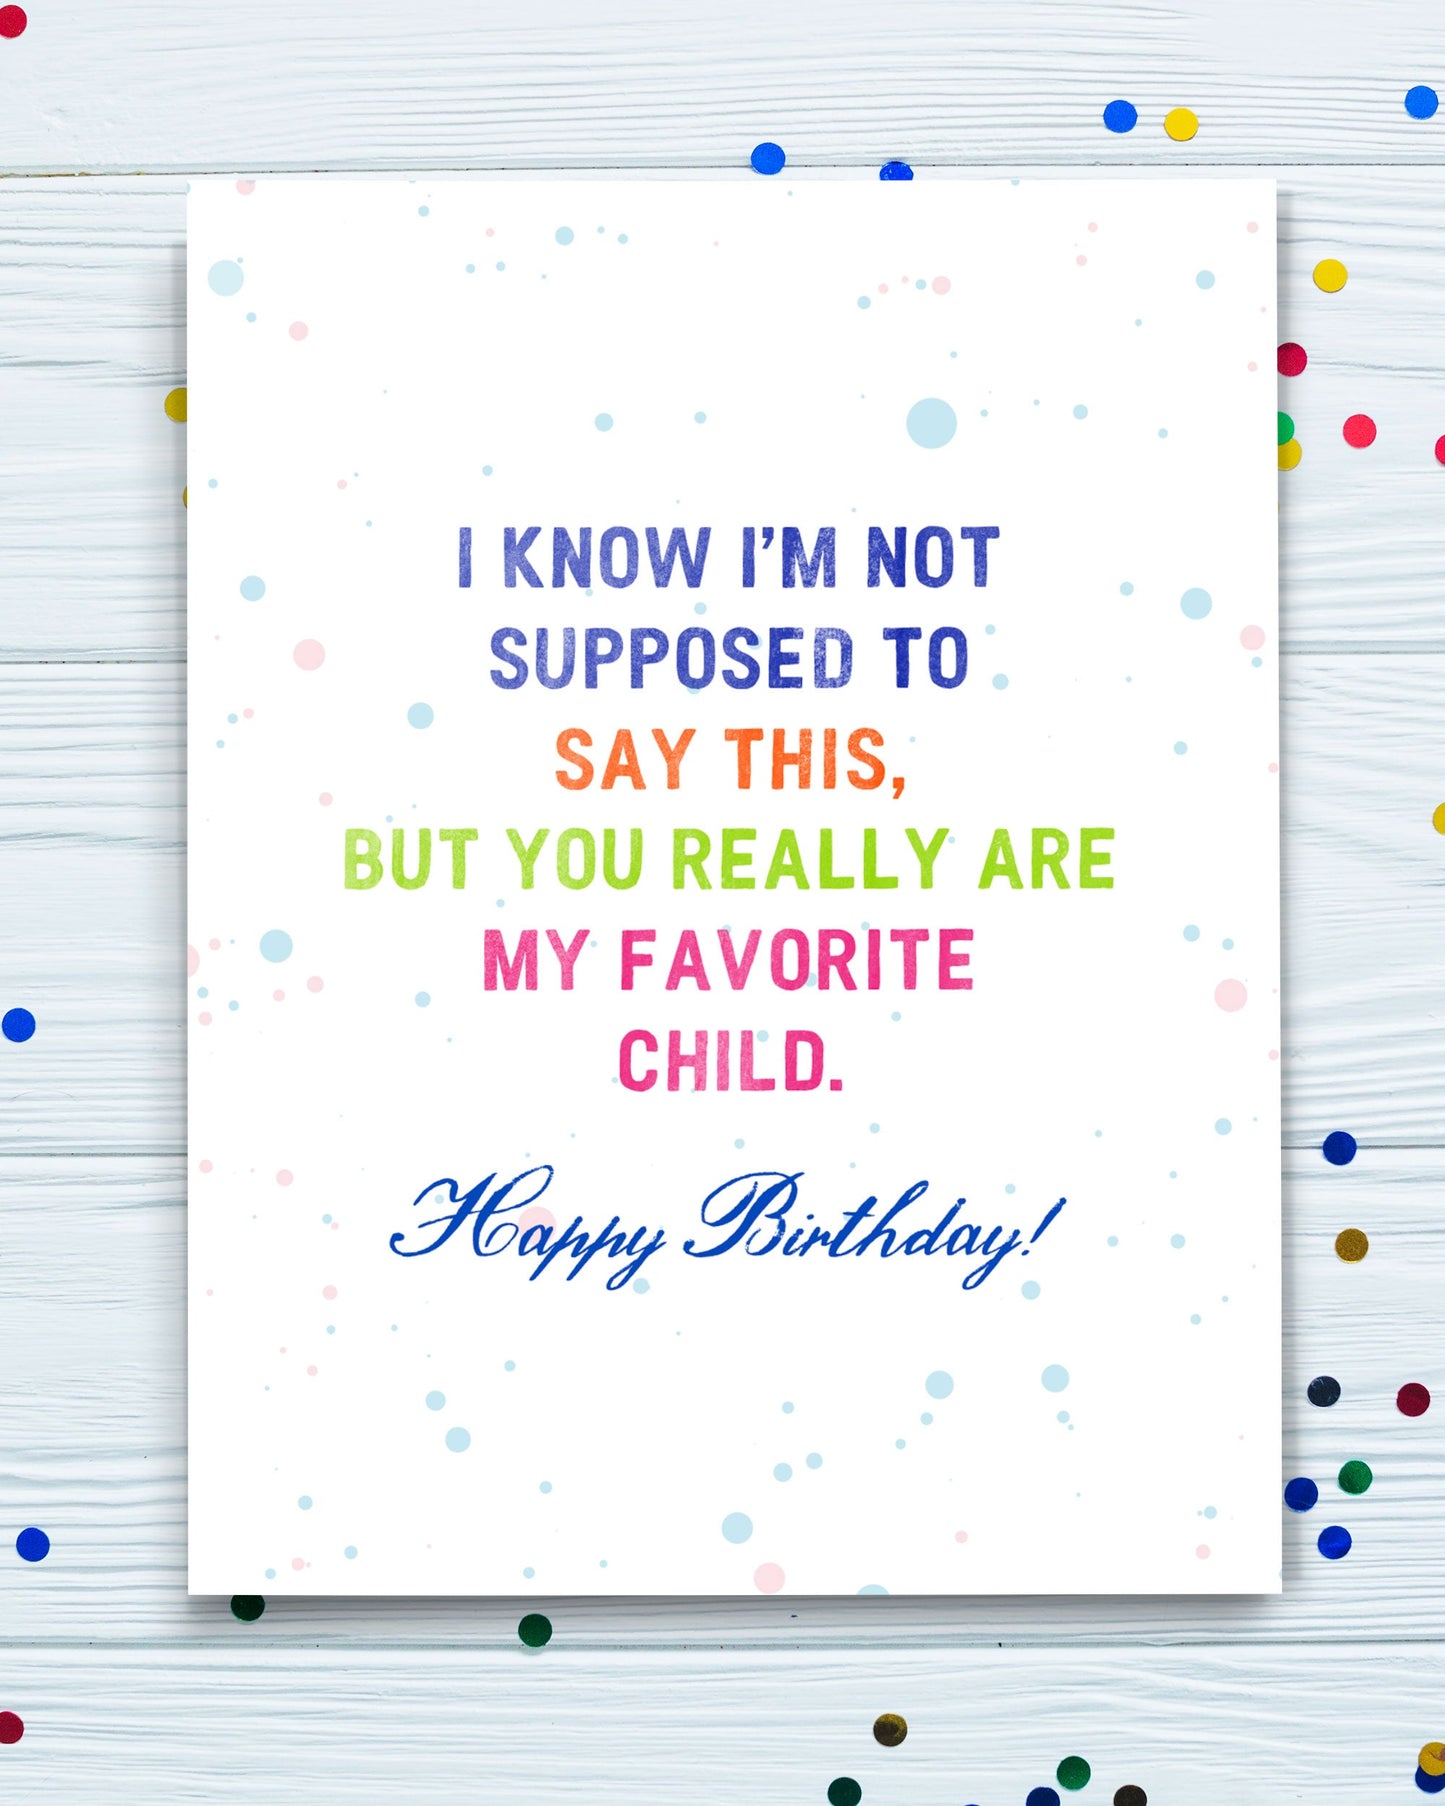 Favorite Child Funny Birthday Card for son or daughter - Transit Design - Smirkantile